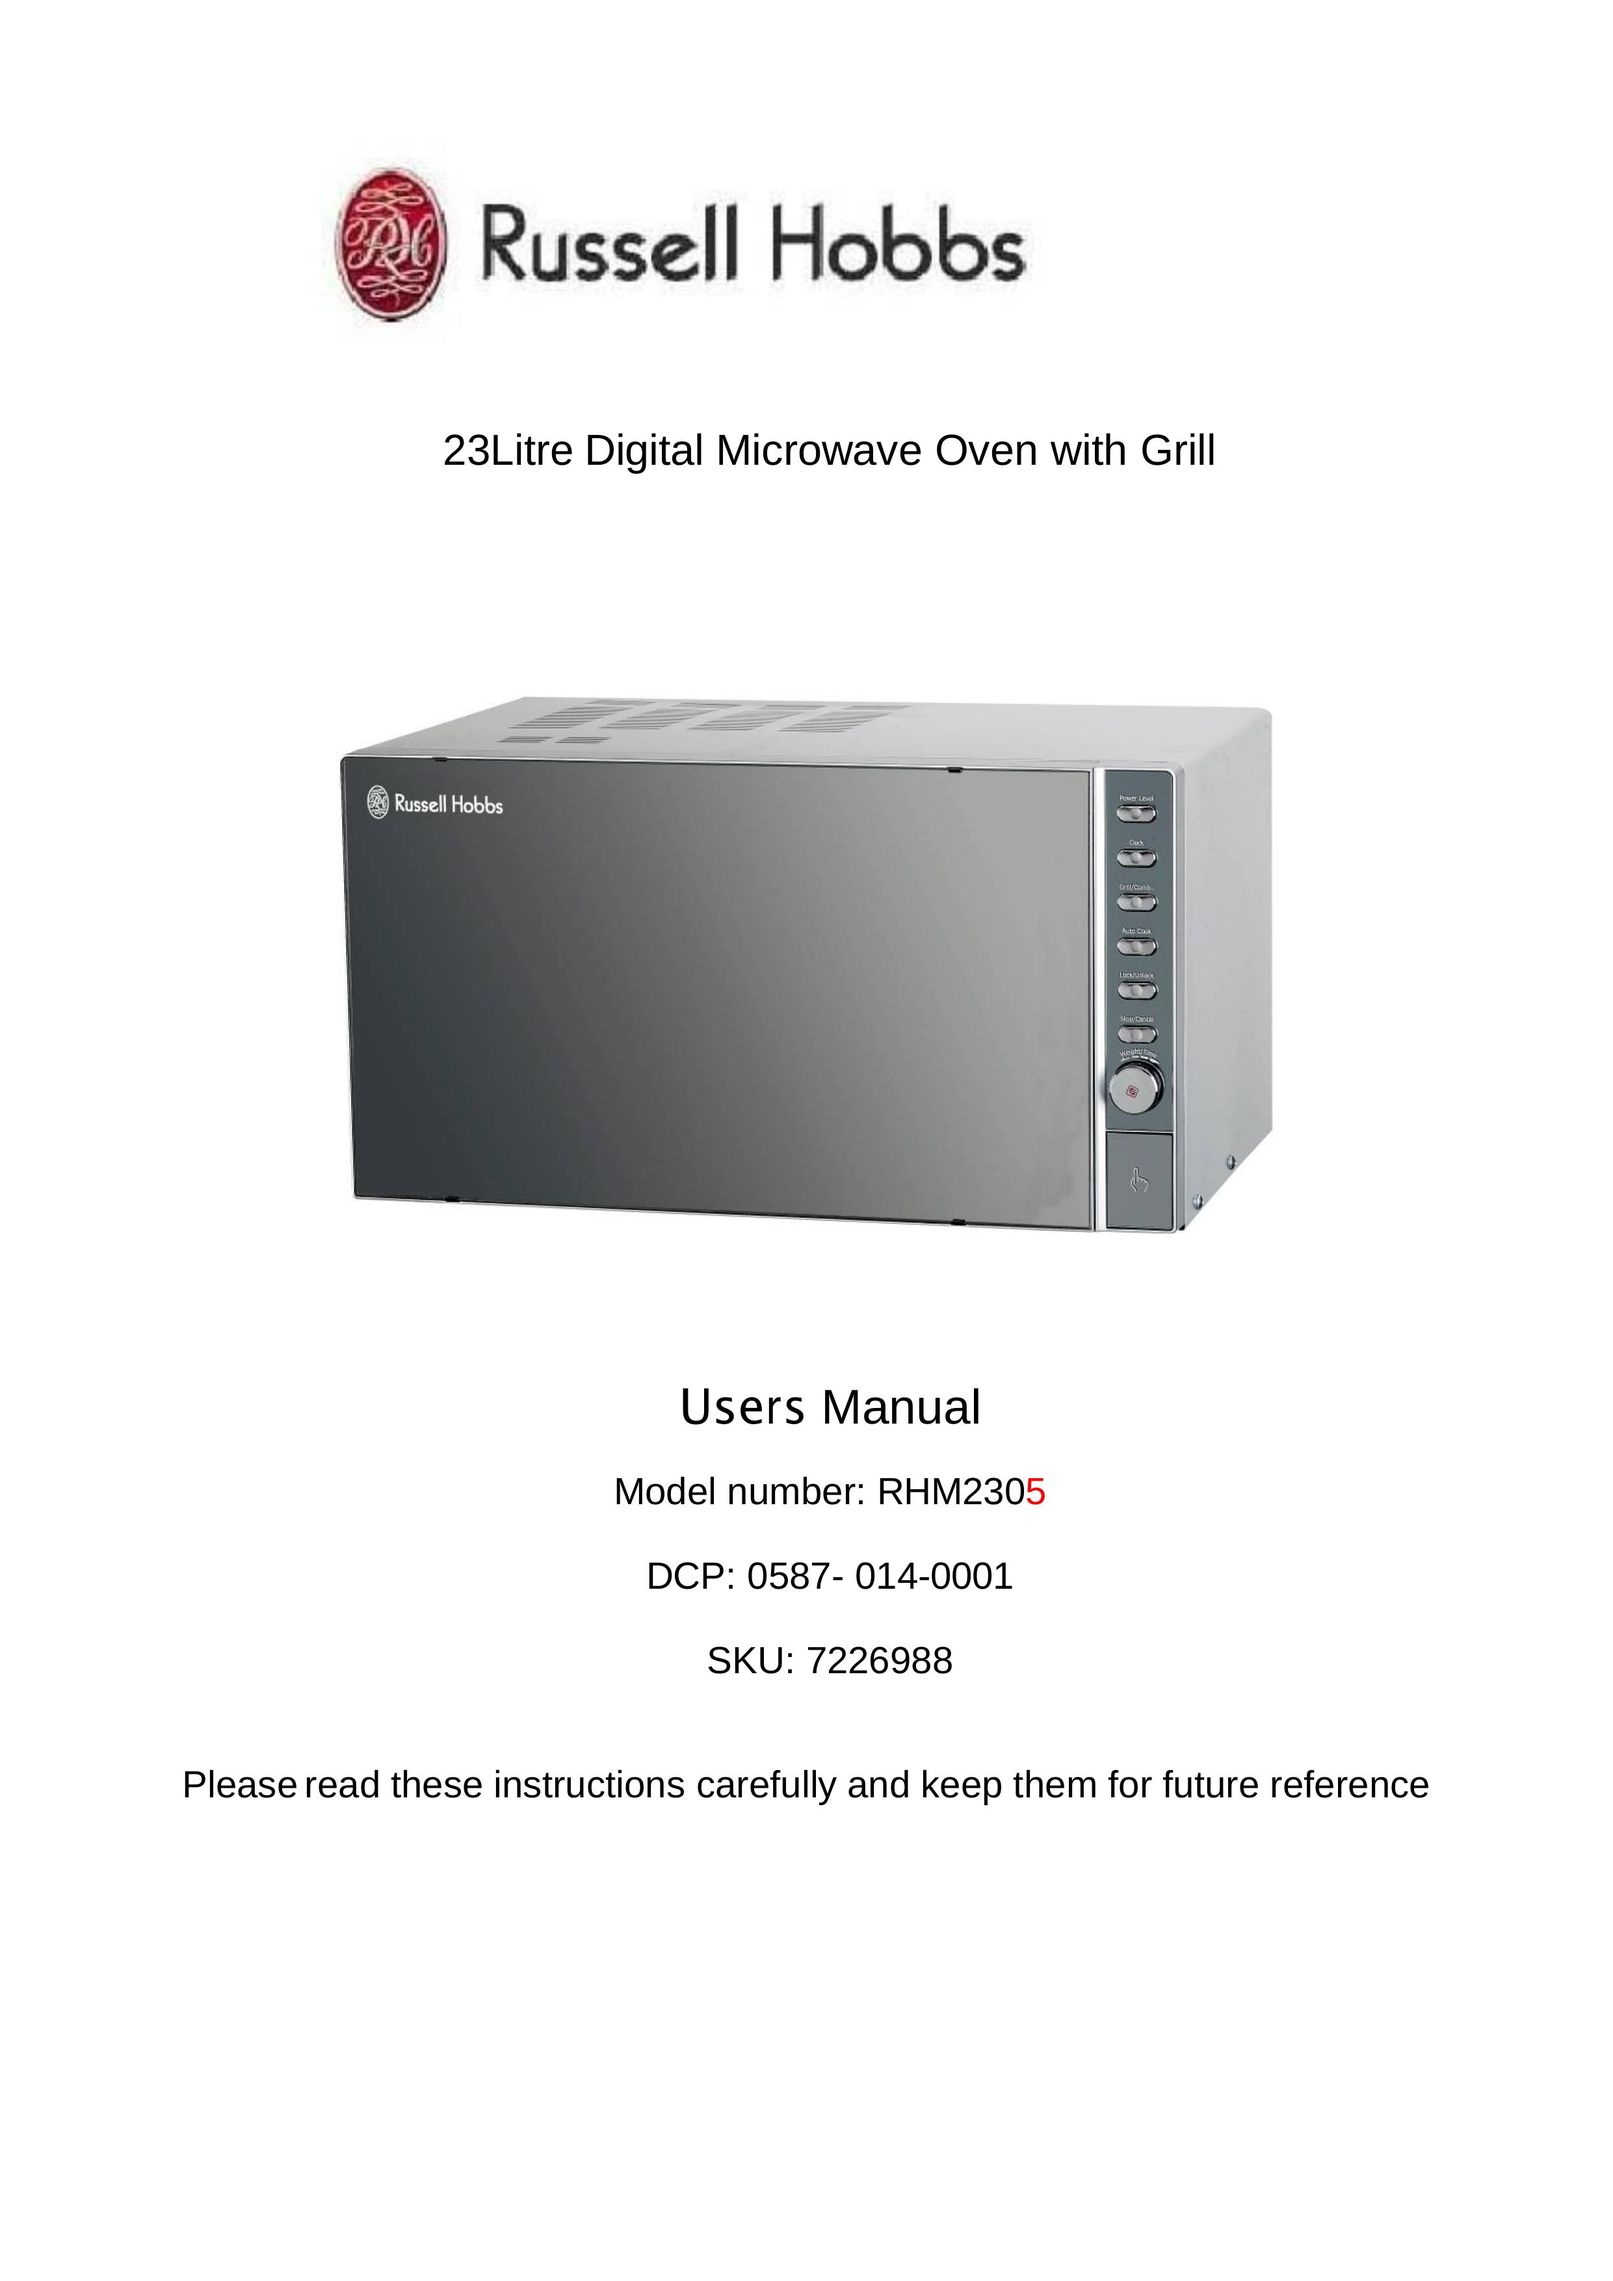 Russell Hobbs RHM2305 Microwave Oven User Manual